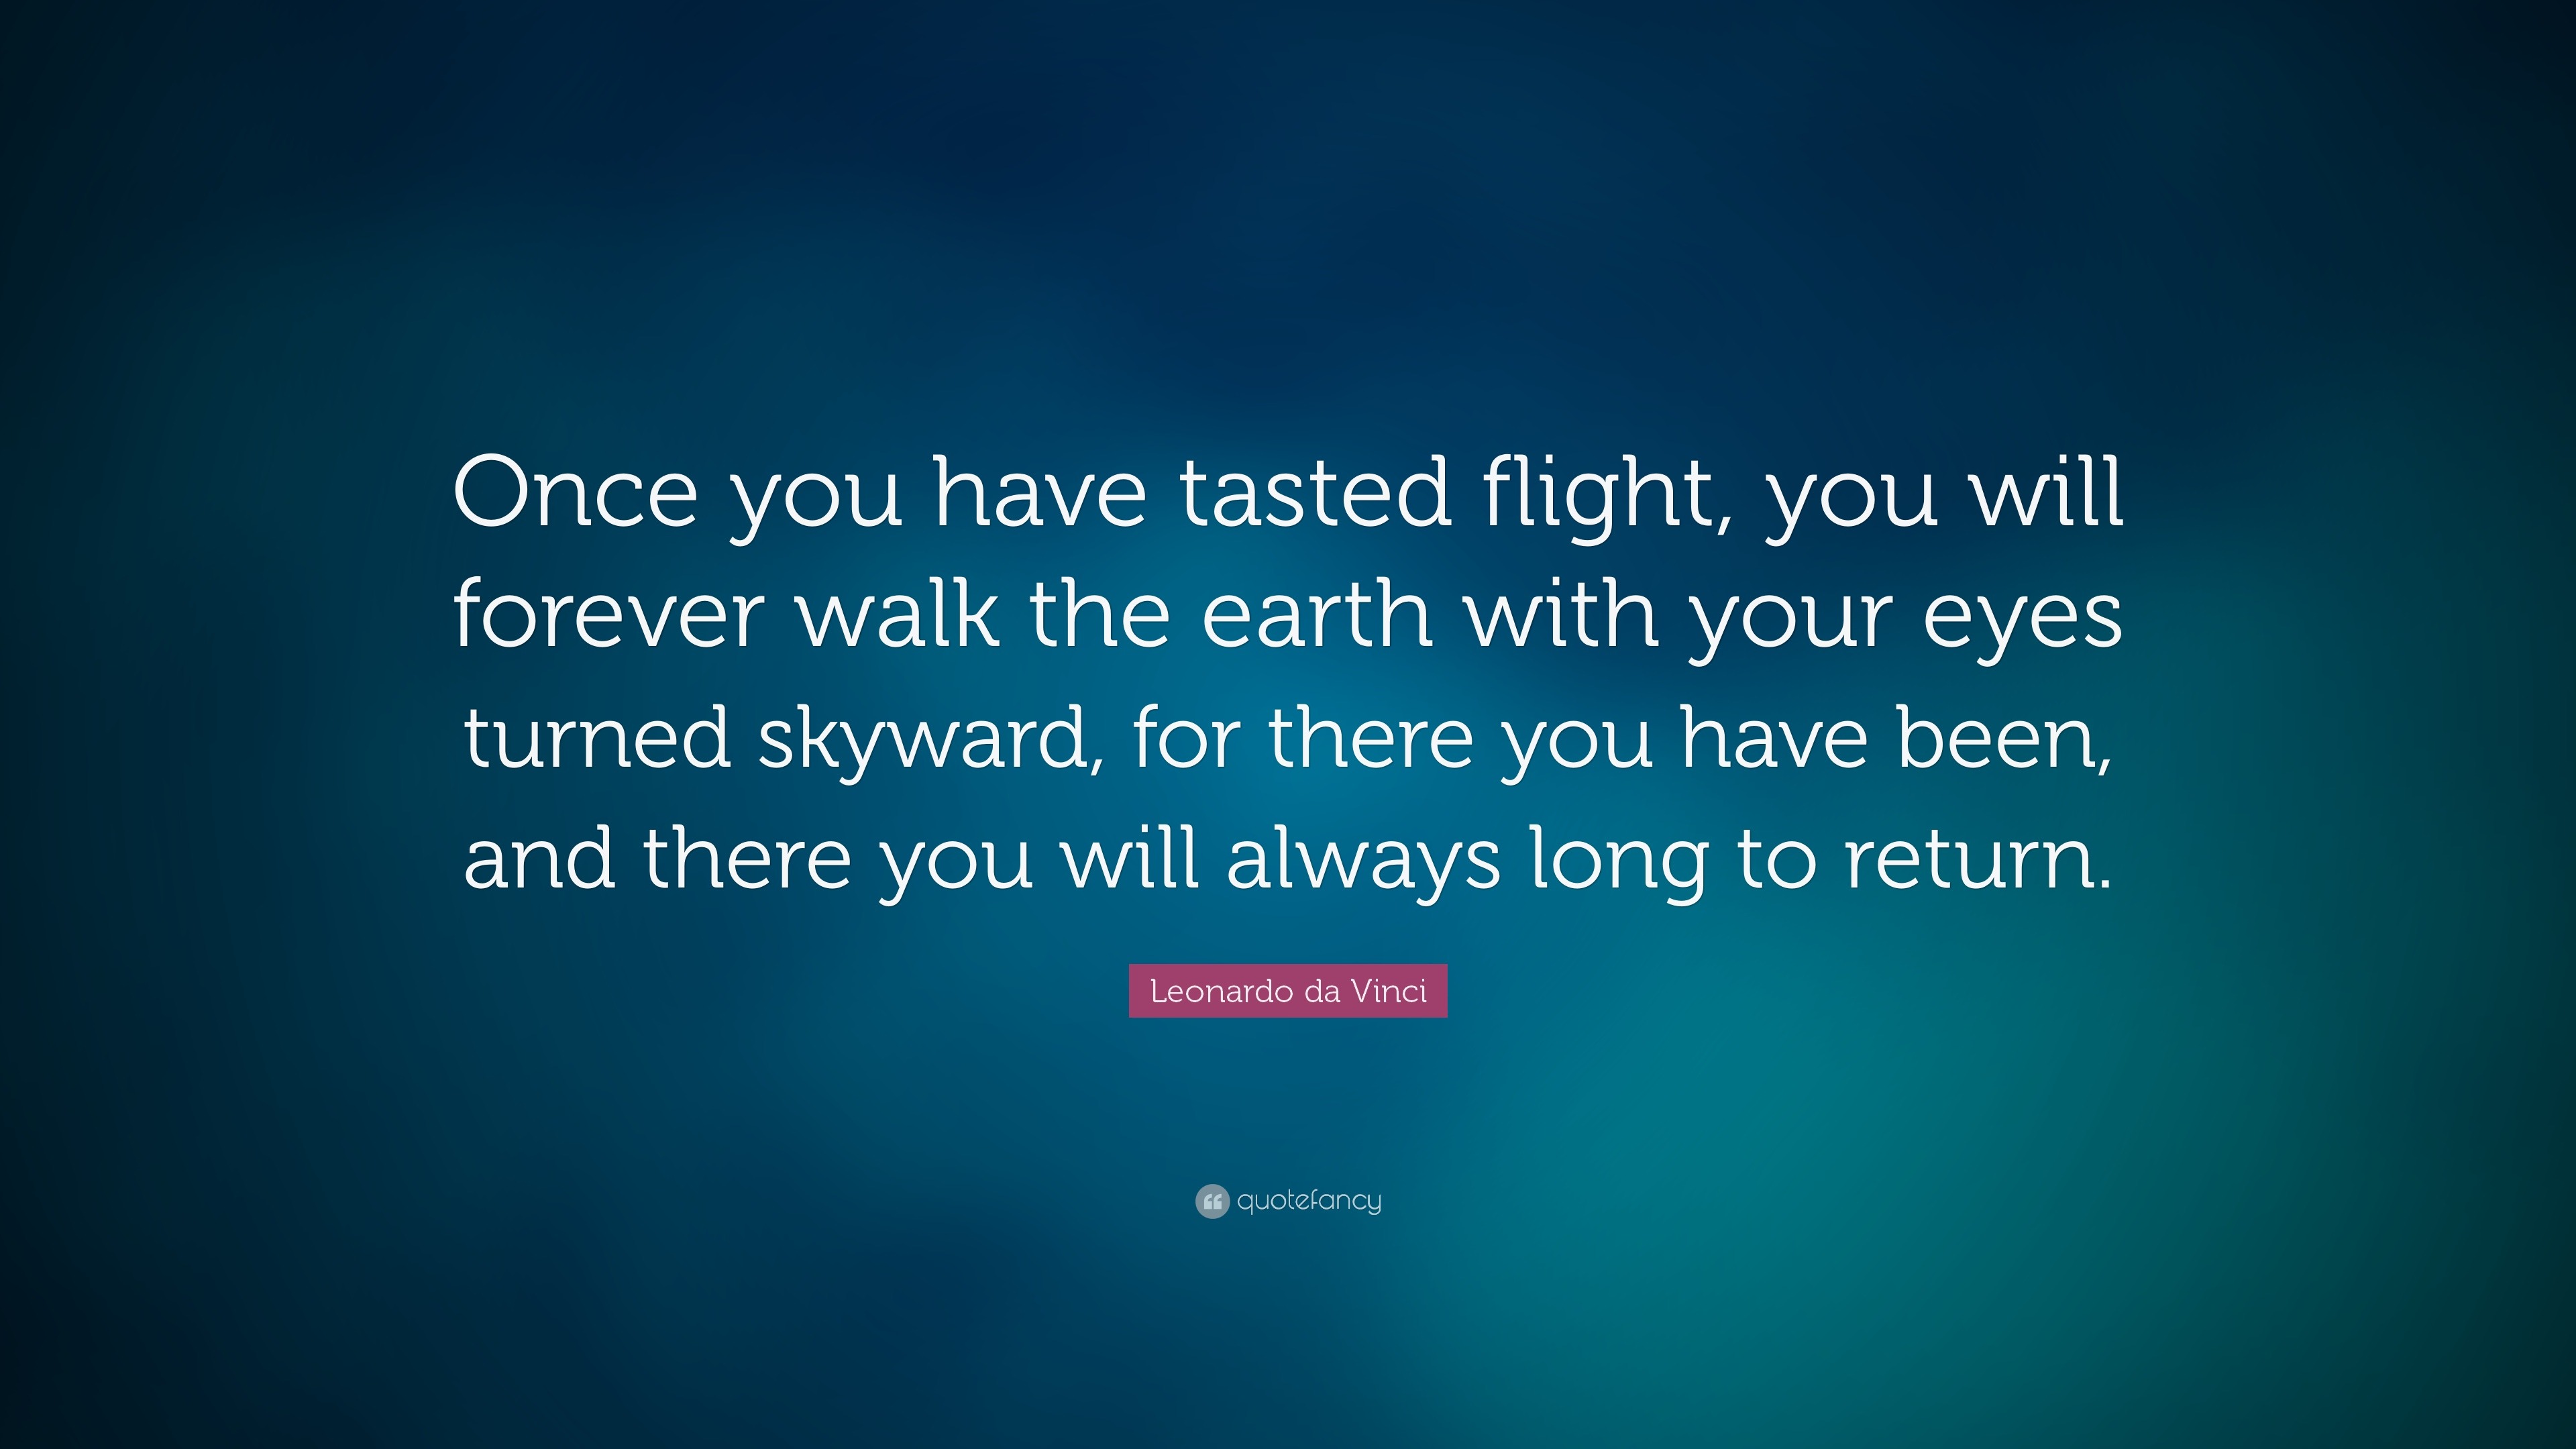 Leonardo da Vinci Quote: “Once you have tasted flight, you ...